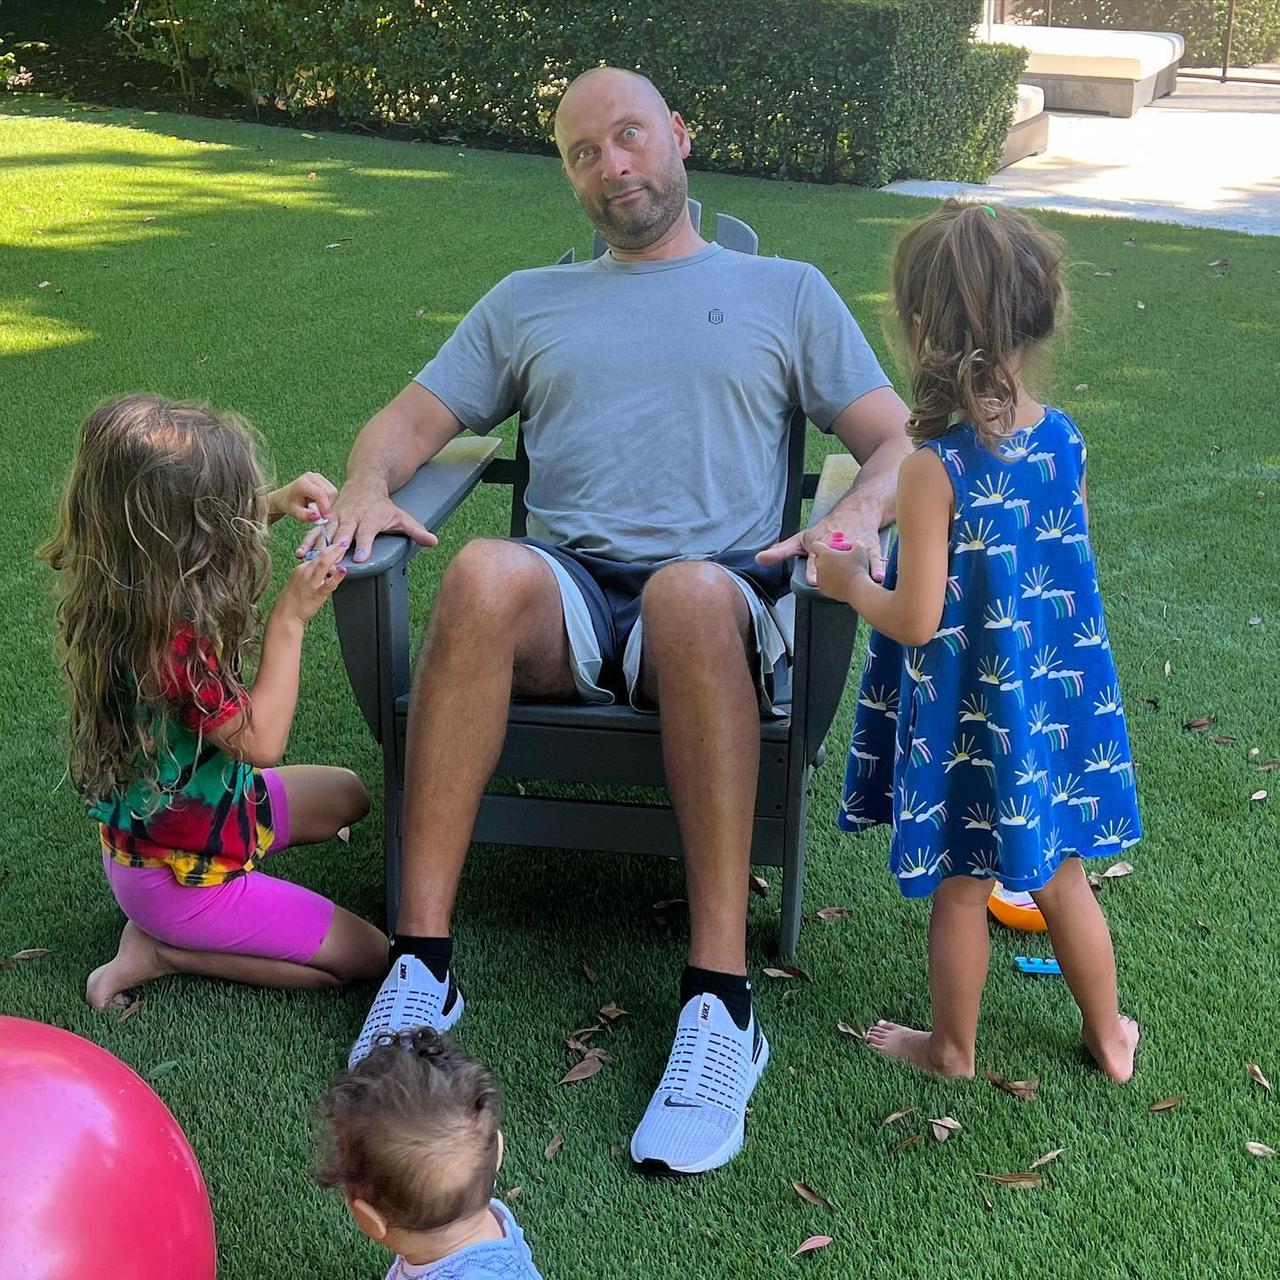 Derek Jeter On Parenting Four Kids: 'It's Just Chaotic'